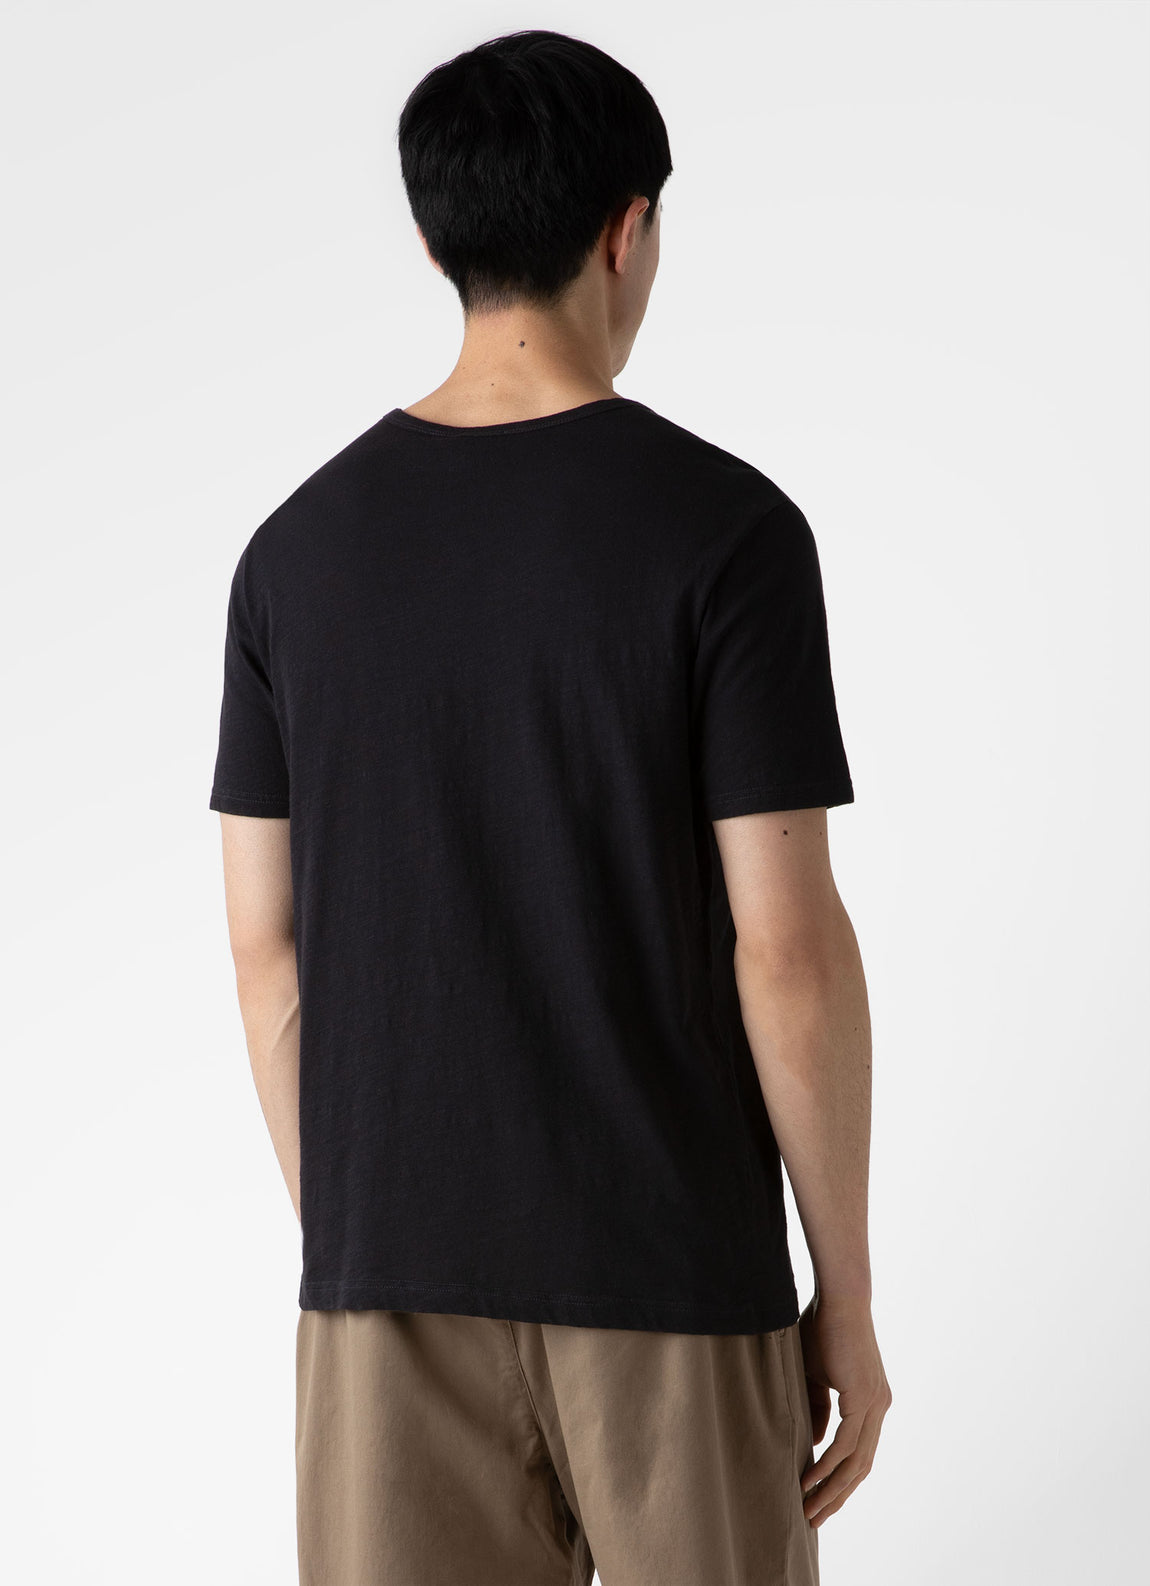 Men's Cotton Linen T-shirt in Black | Sunspel